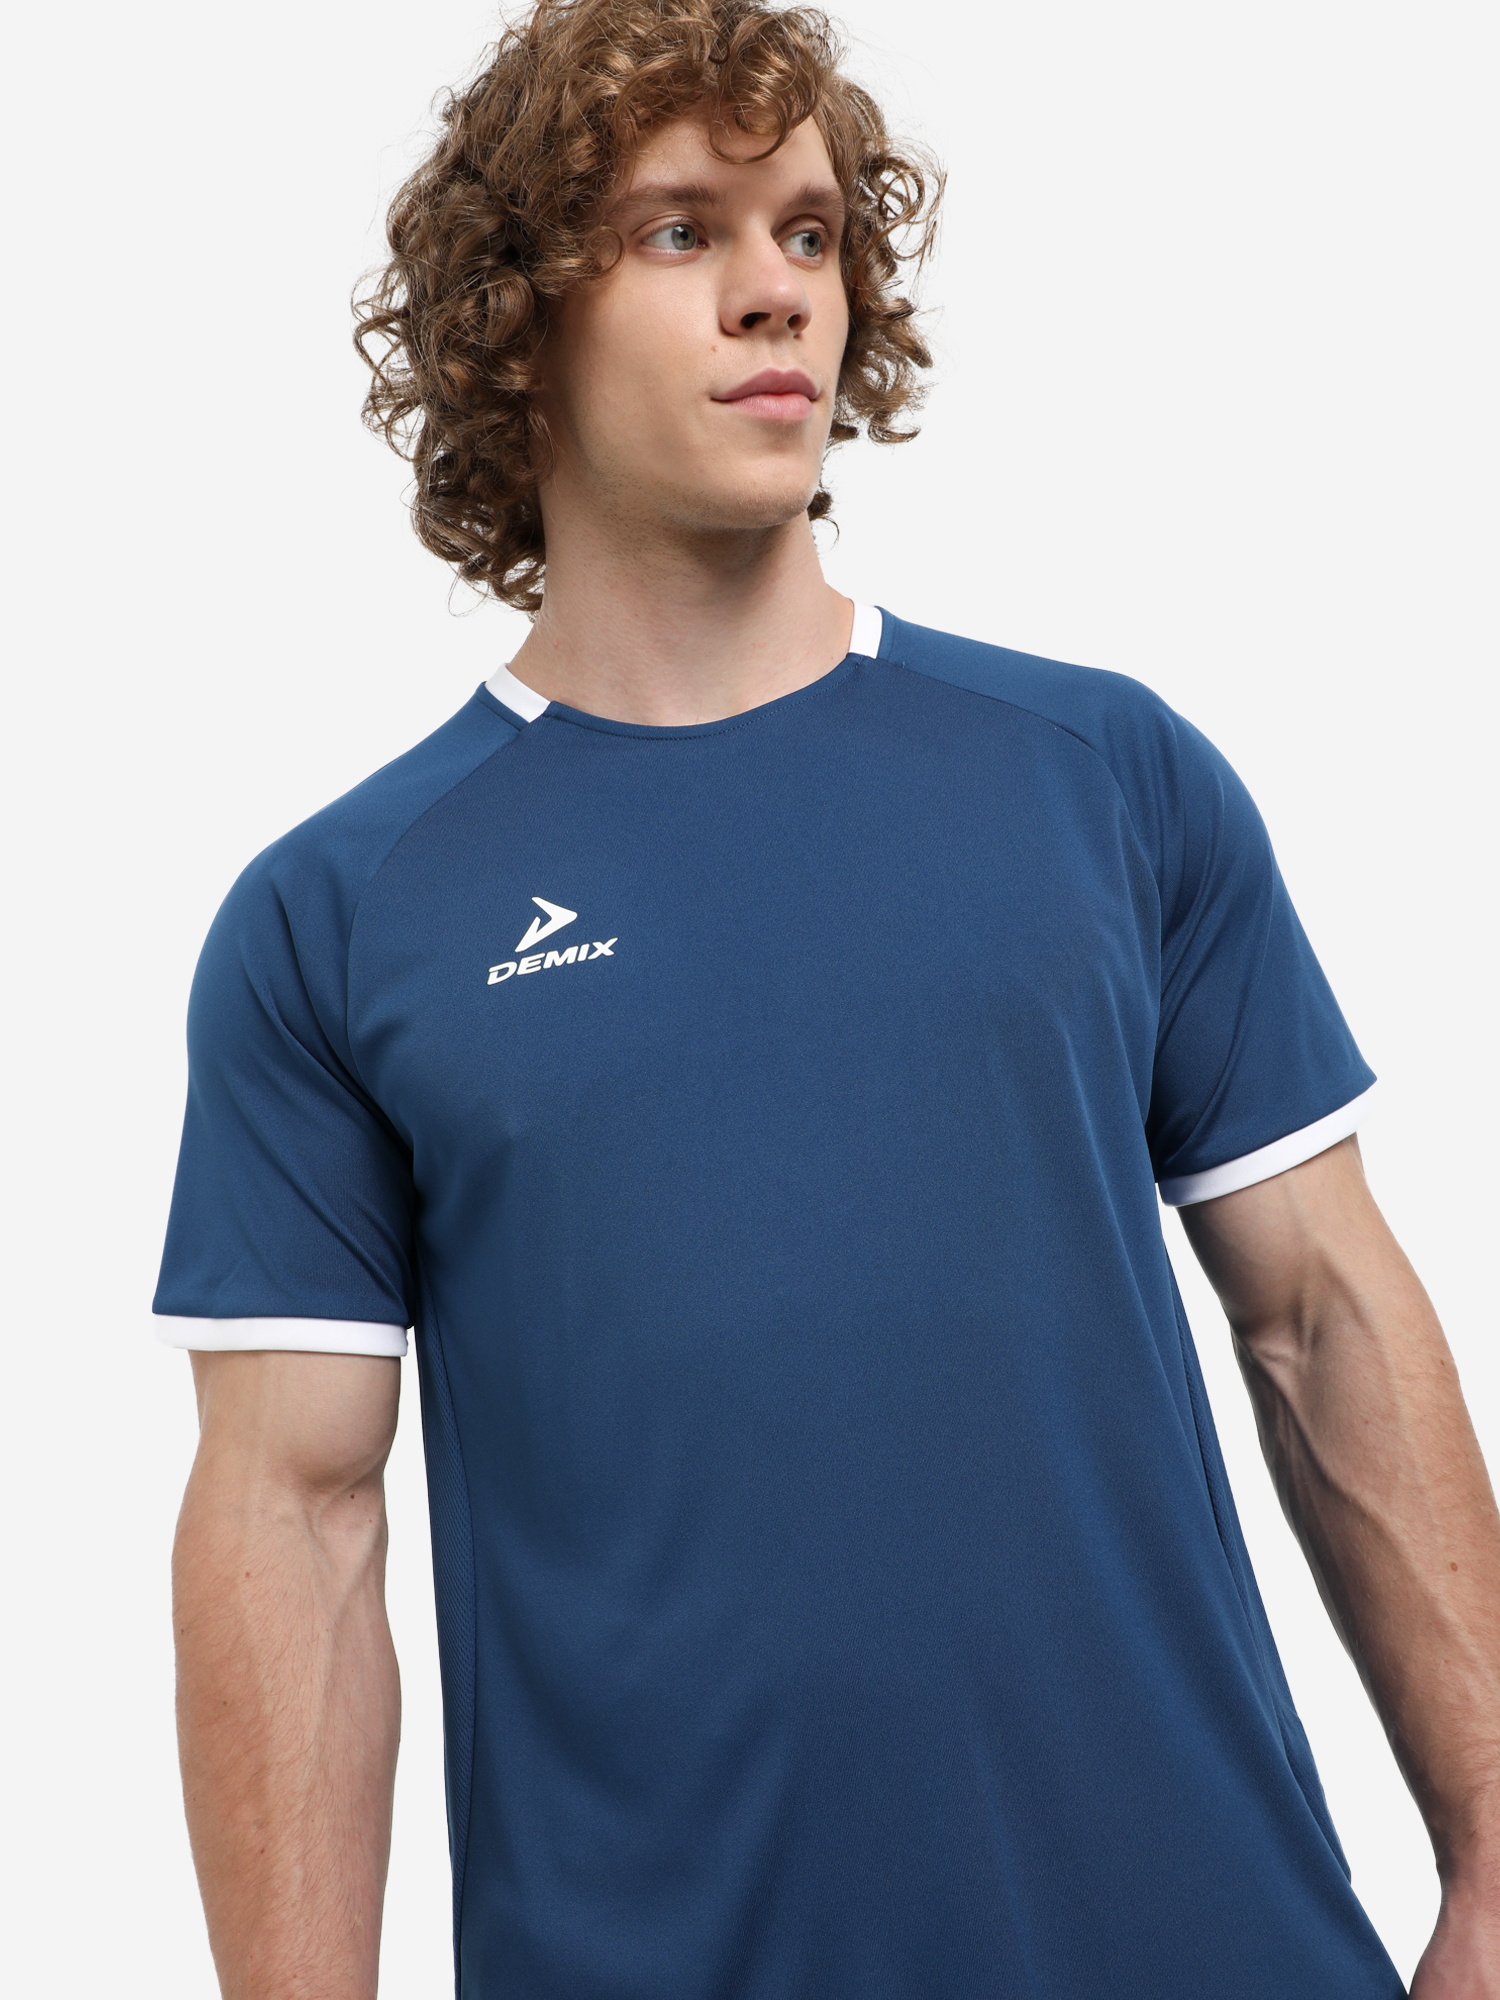 Футболка мужская Demix Division, Синий футболка мужская demix strike синий